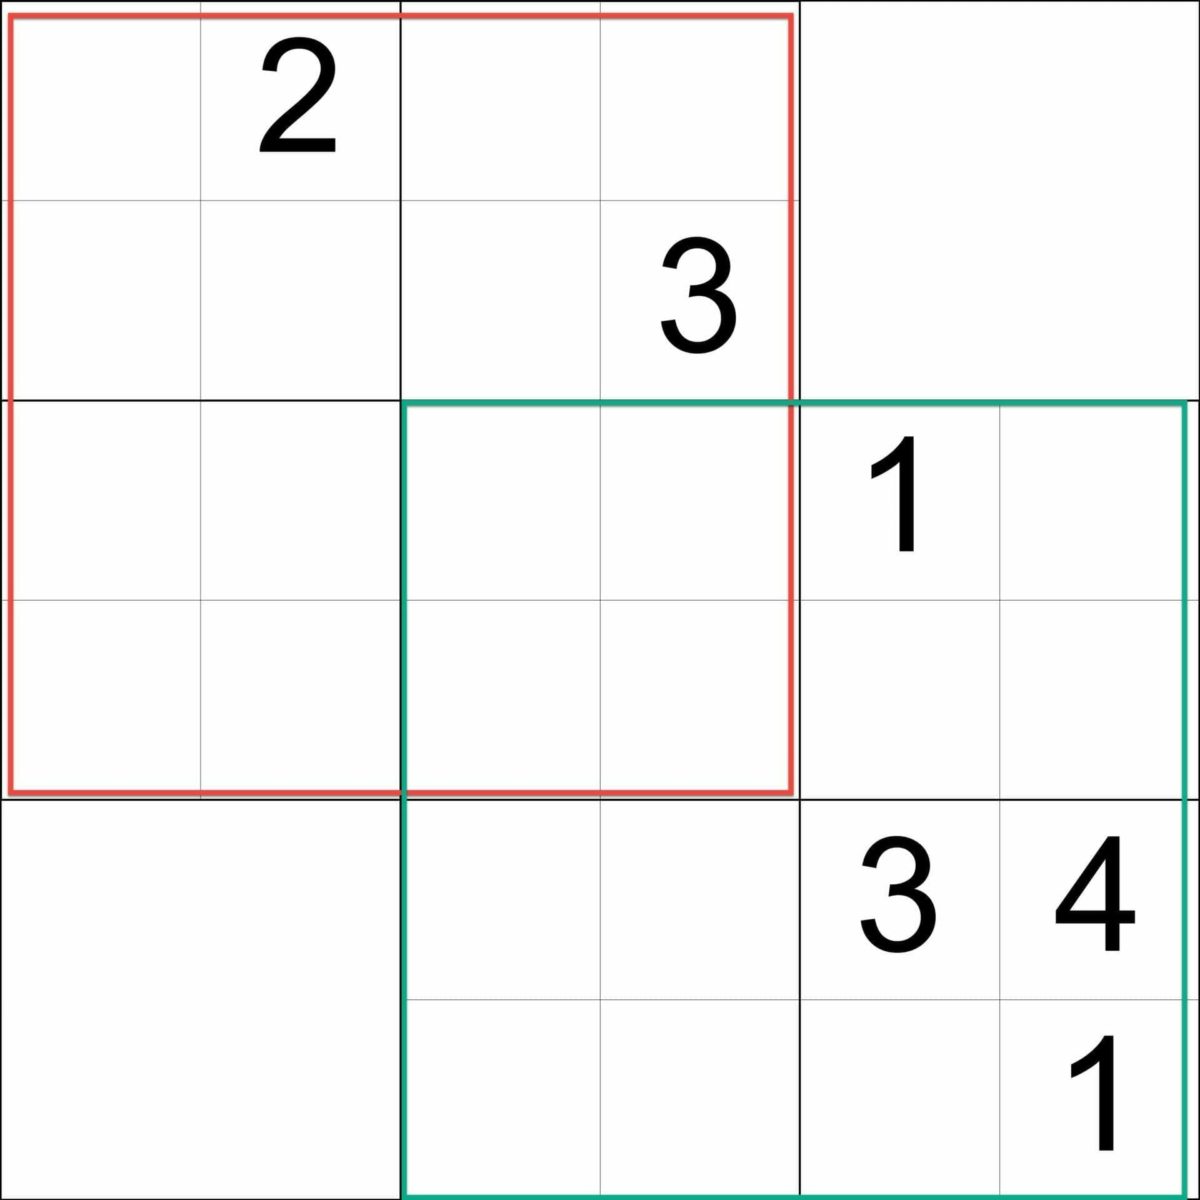 Sudoku 4x4 Sensei Overlapping Grids Illustration